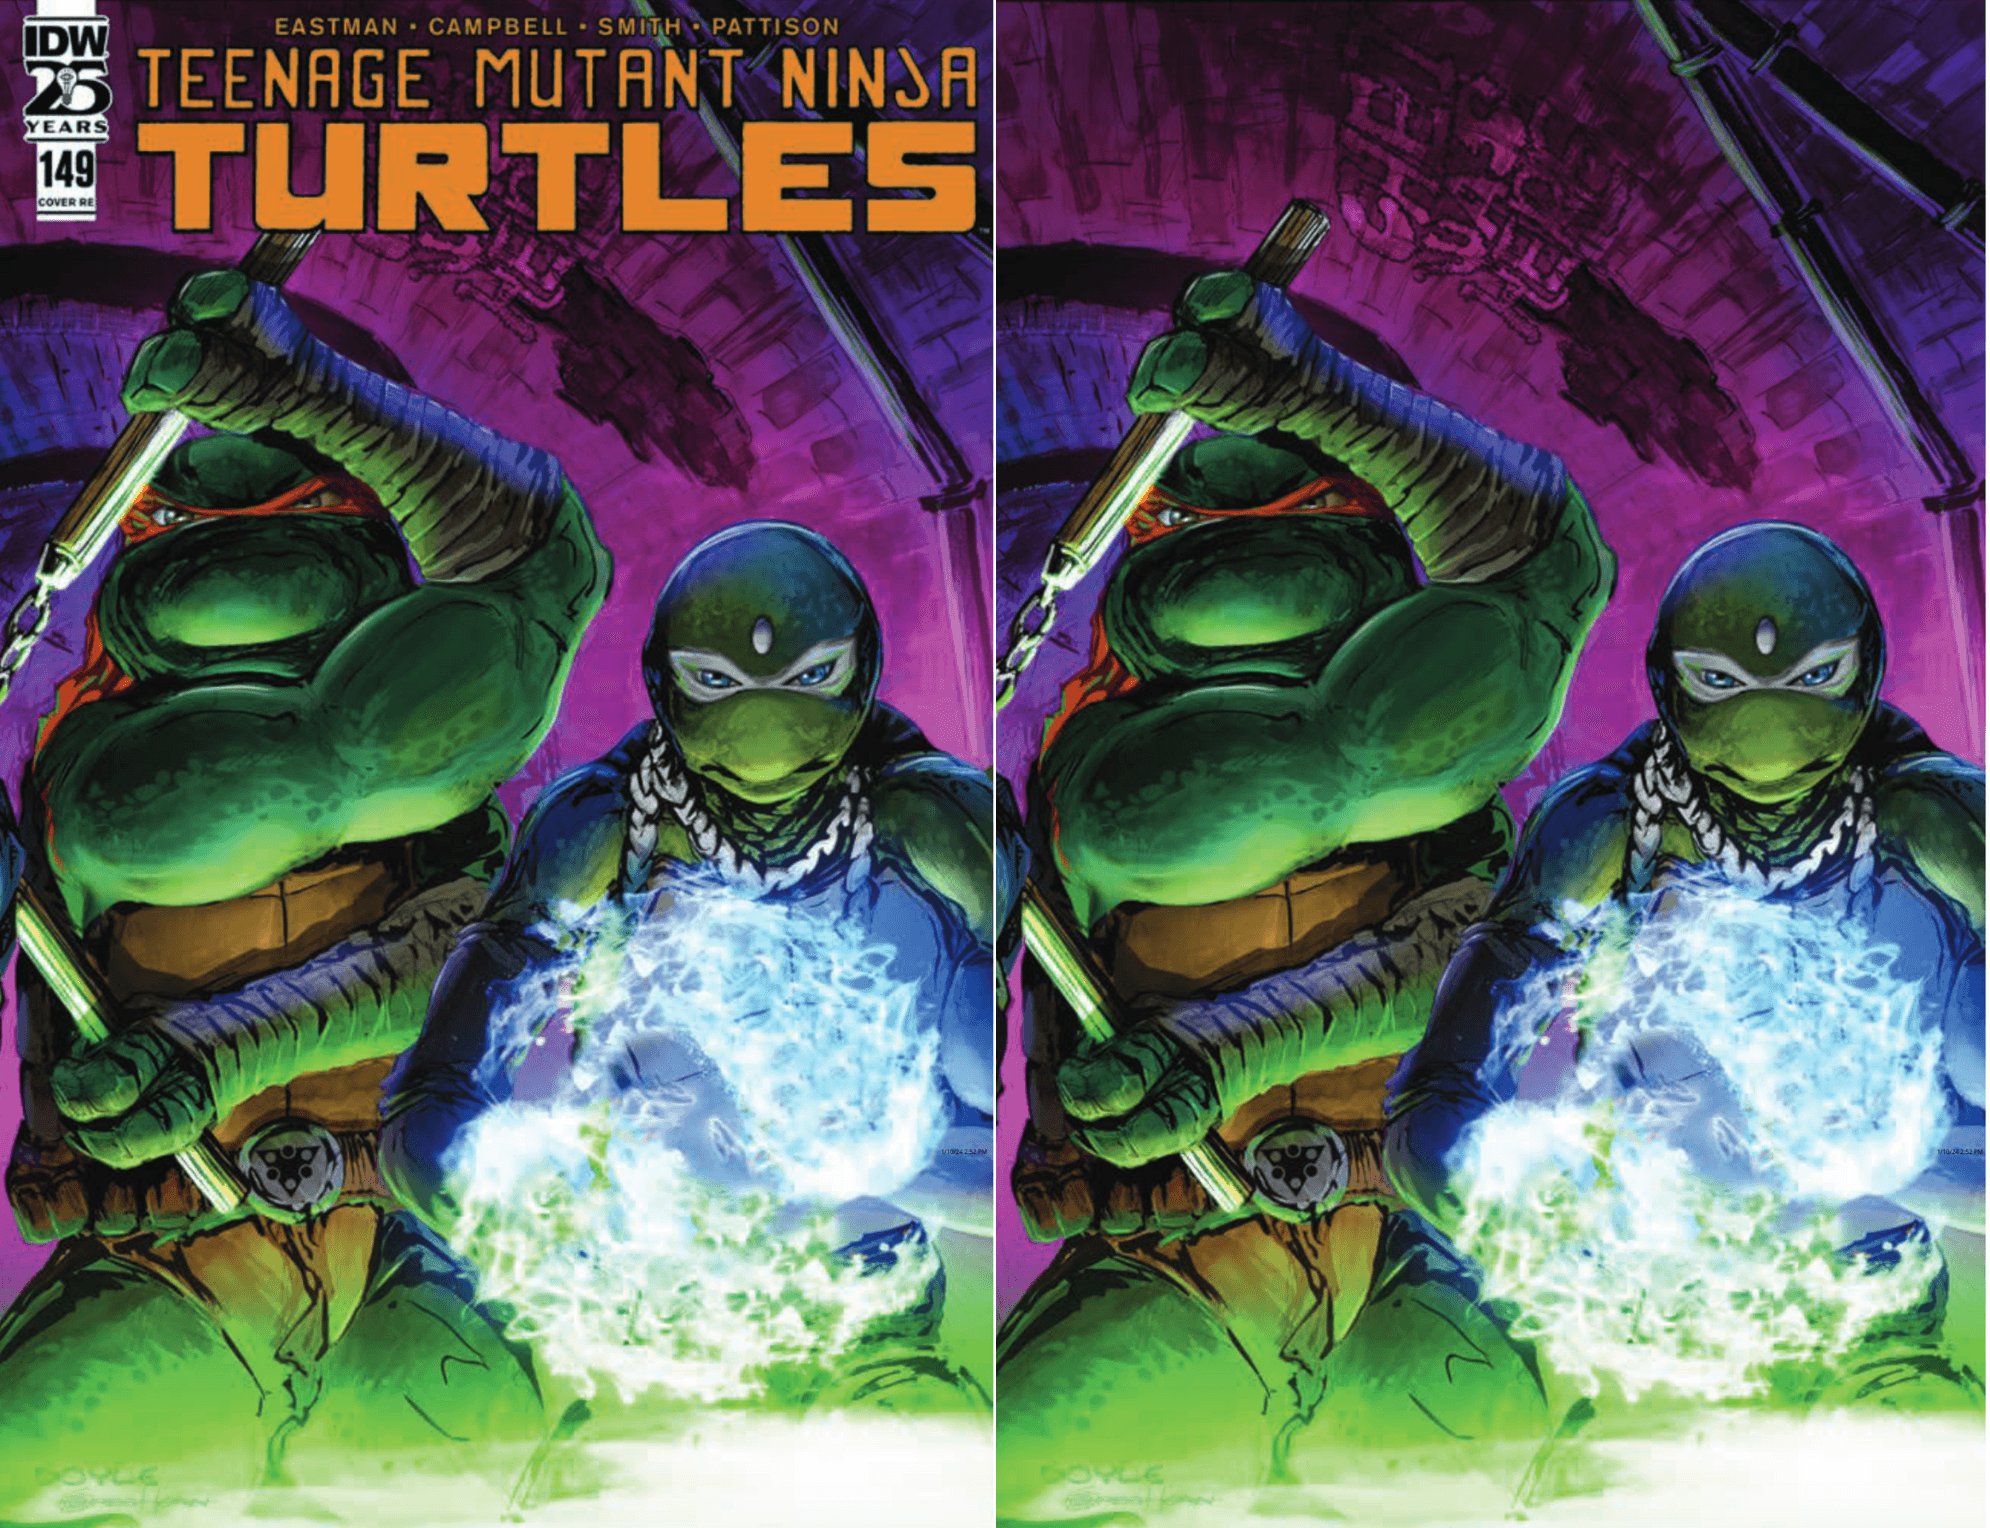 Teenage Mutant Ninja Turtles #149 - Lightning Comix Exclusive - Trade Dress & Virgin Bundle - LIGHTNING COMIX